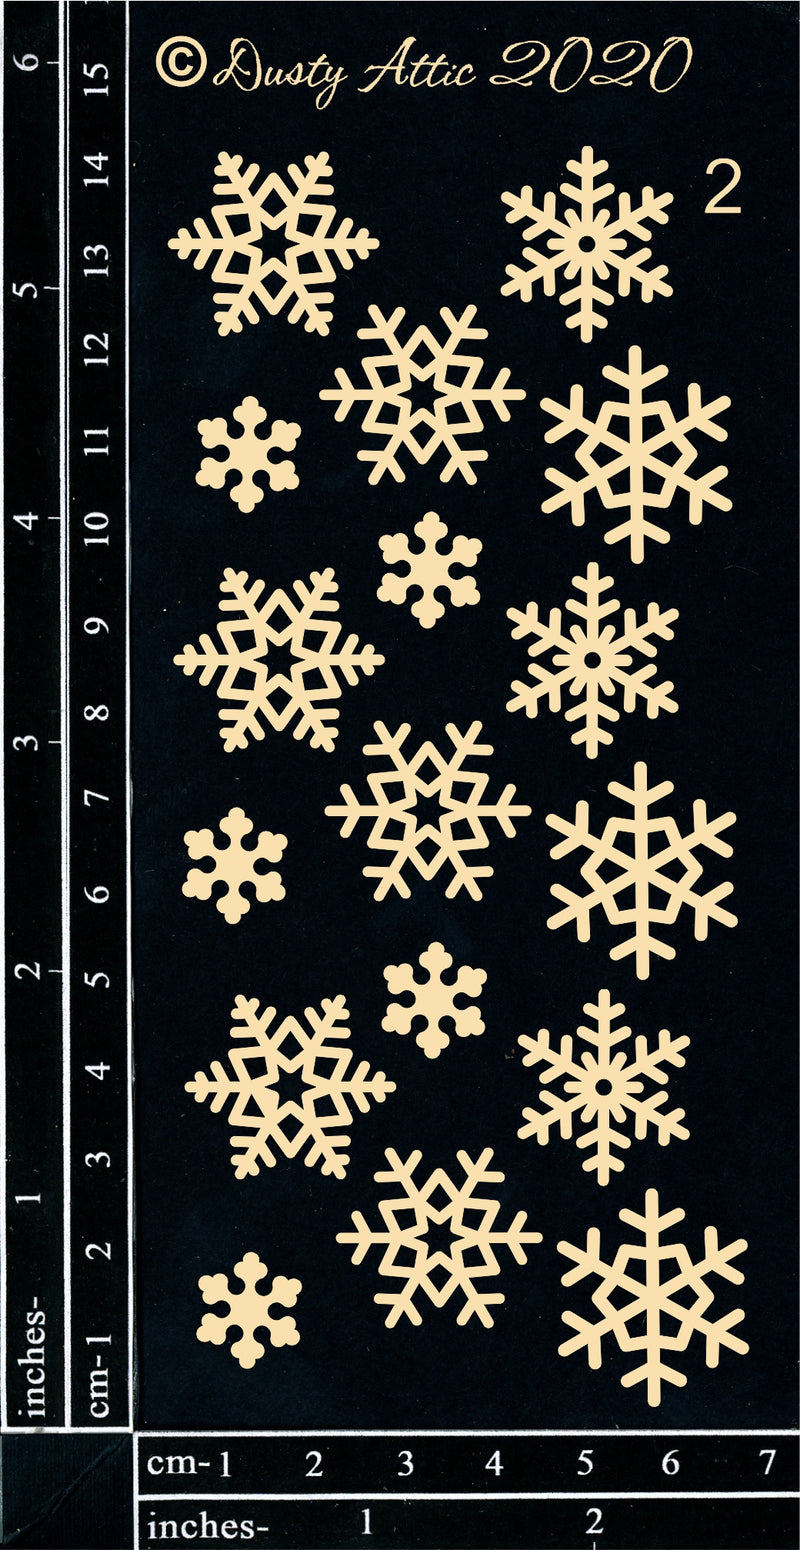 Dusty Attic Chipboard 3x6 - Snowflakes